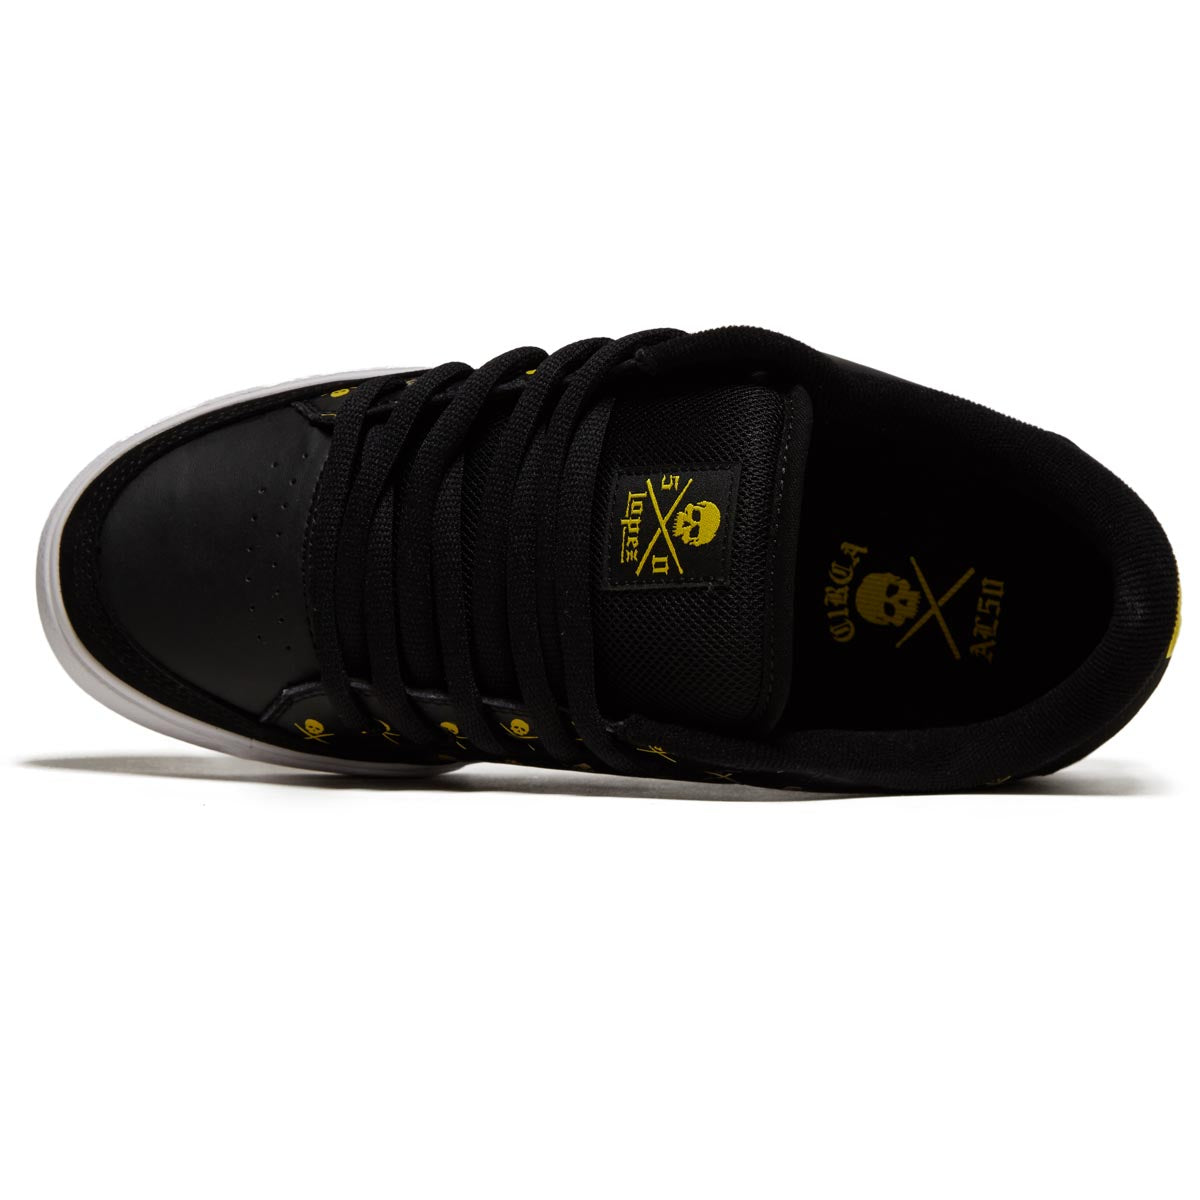 C1rca AL 50 Shoes - Black/Yellow Skull image 3